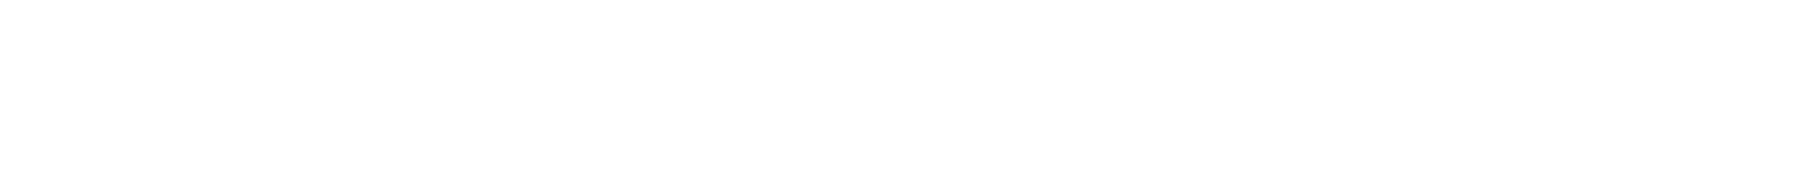 diamant-grill-logo